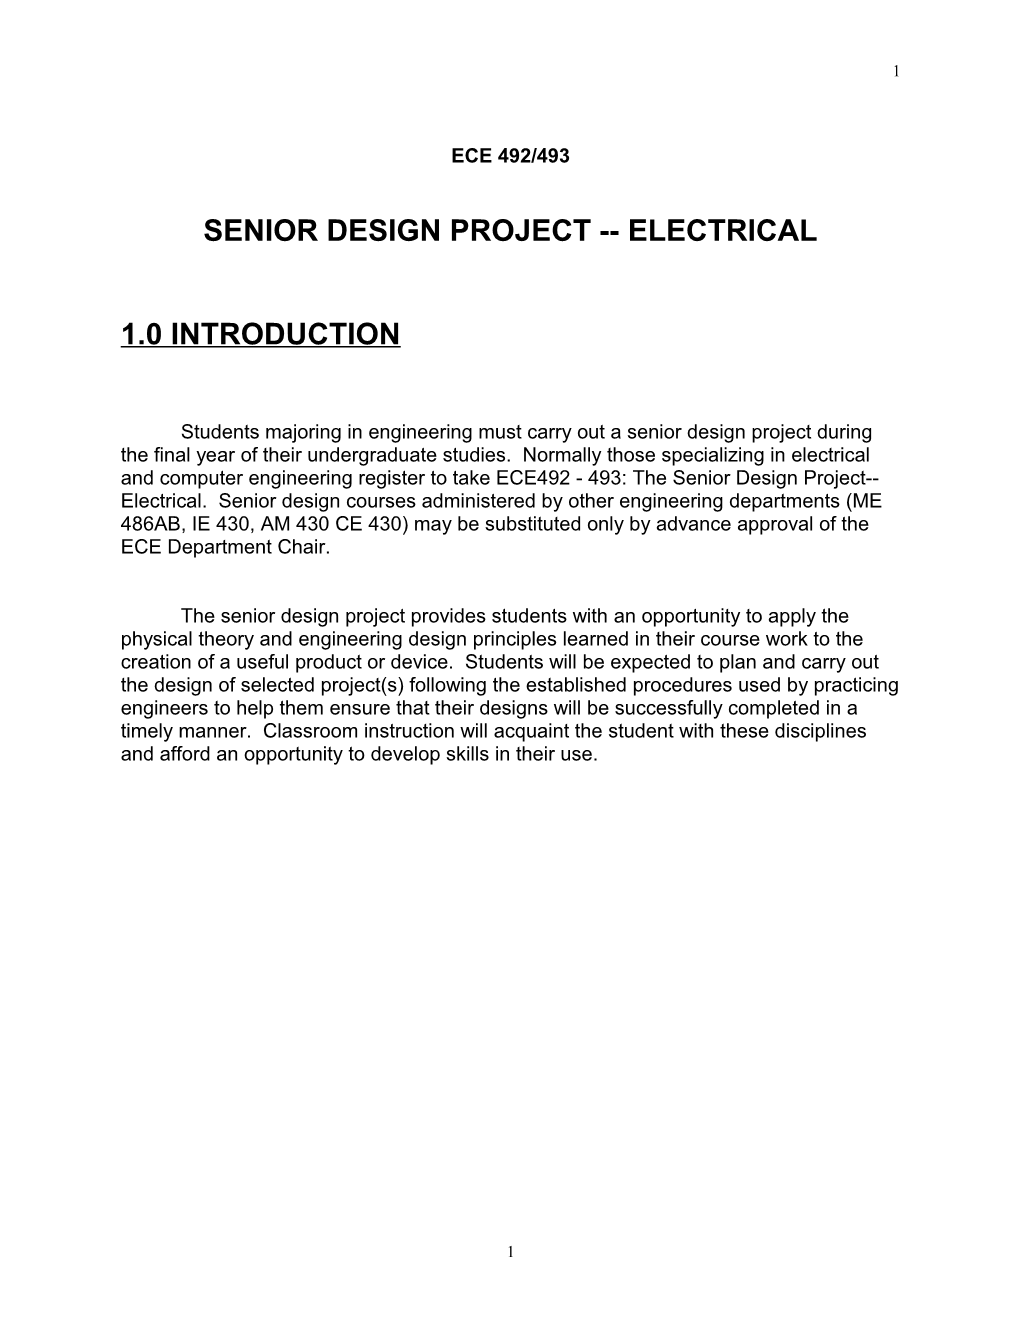 Senior Design Project Electrical